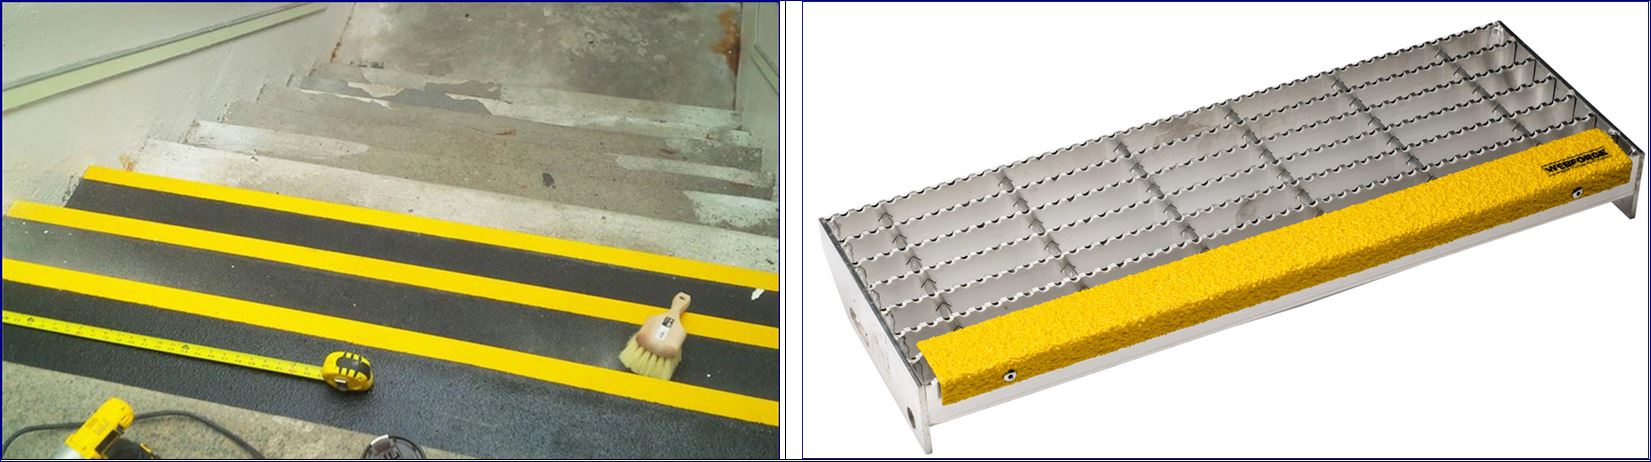 frp fiberglass anti skid safefy walkway tape sheet cover แผ่นปิดจมูกขอบมุมคิ้วแผงครอบบันไดเทปปิดพื้นผิวกันลื่นทางเดินไฟเบอร์กล๊าส 